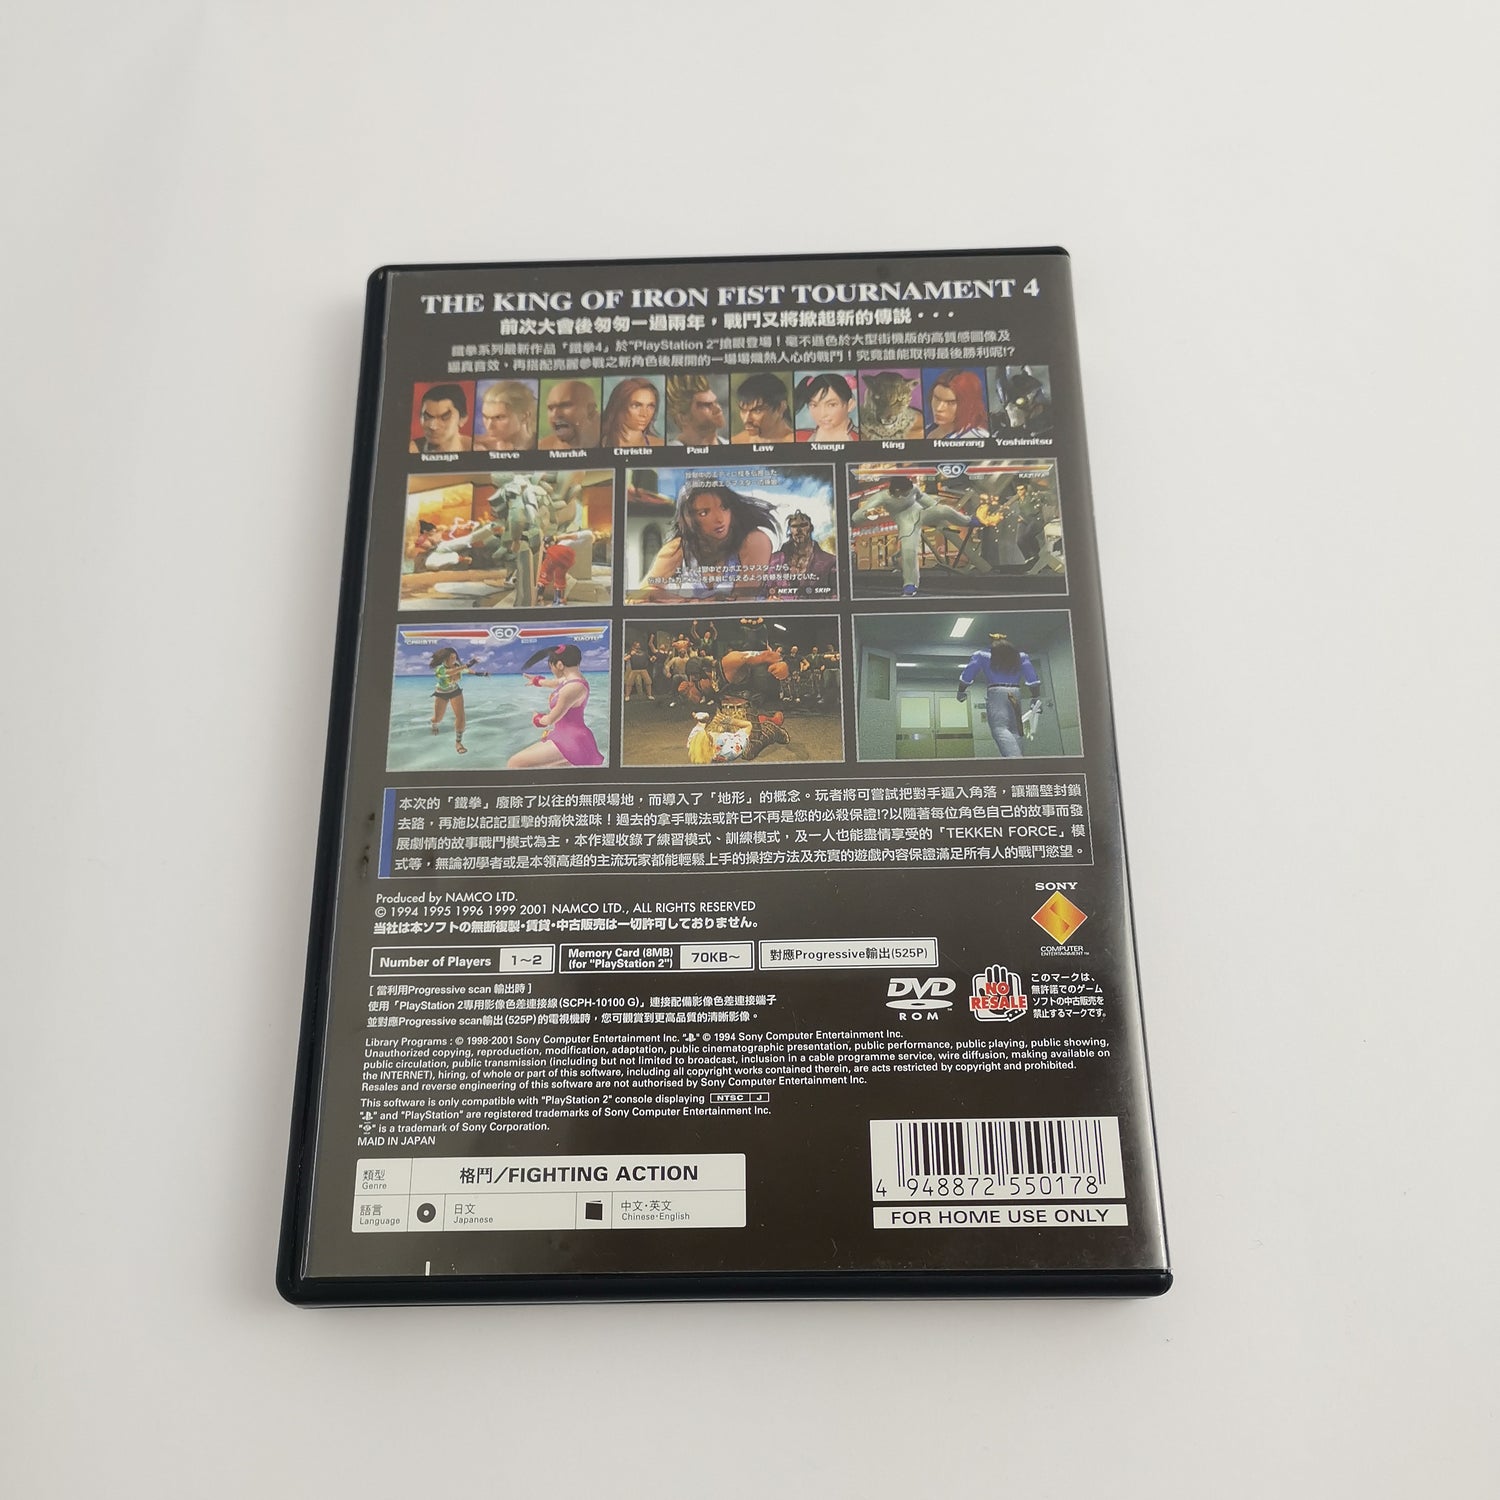 Sony Playstation 2 Spiel : Tekken 4 | PS2 Namco - OVP NTSC-J JAPAN Version